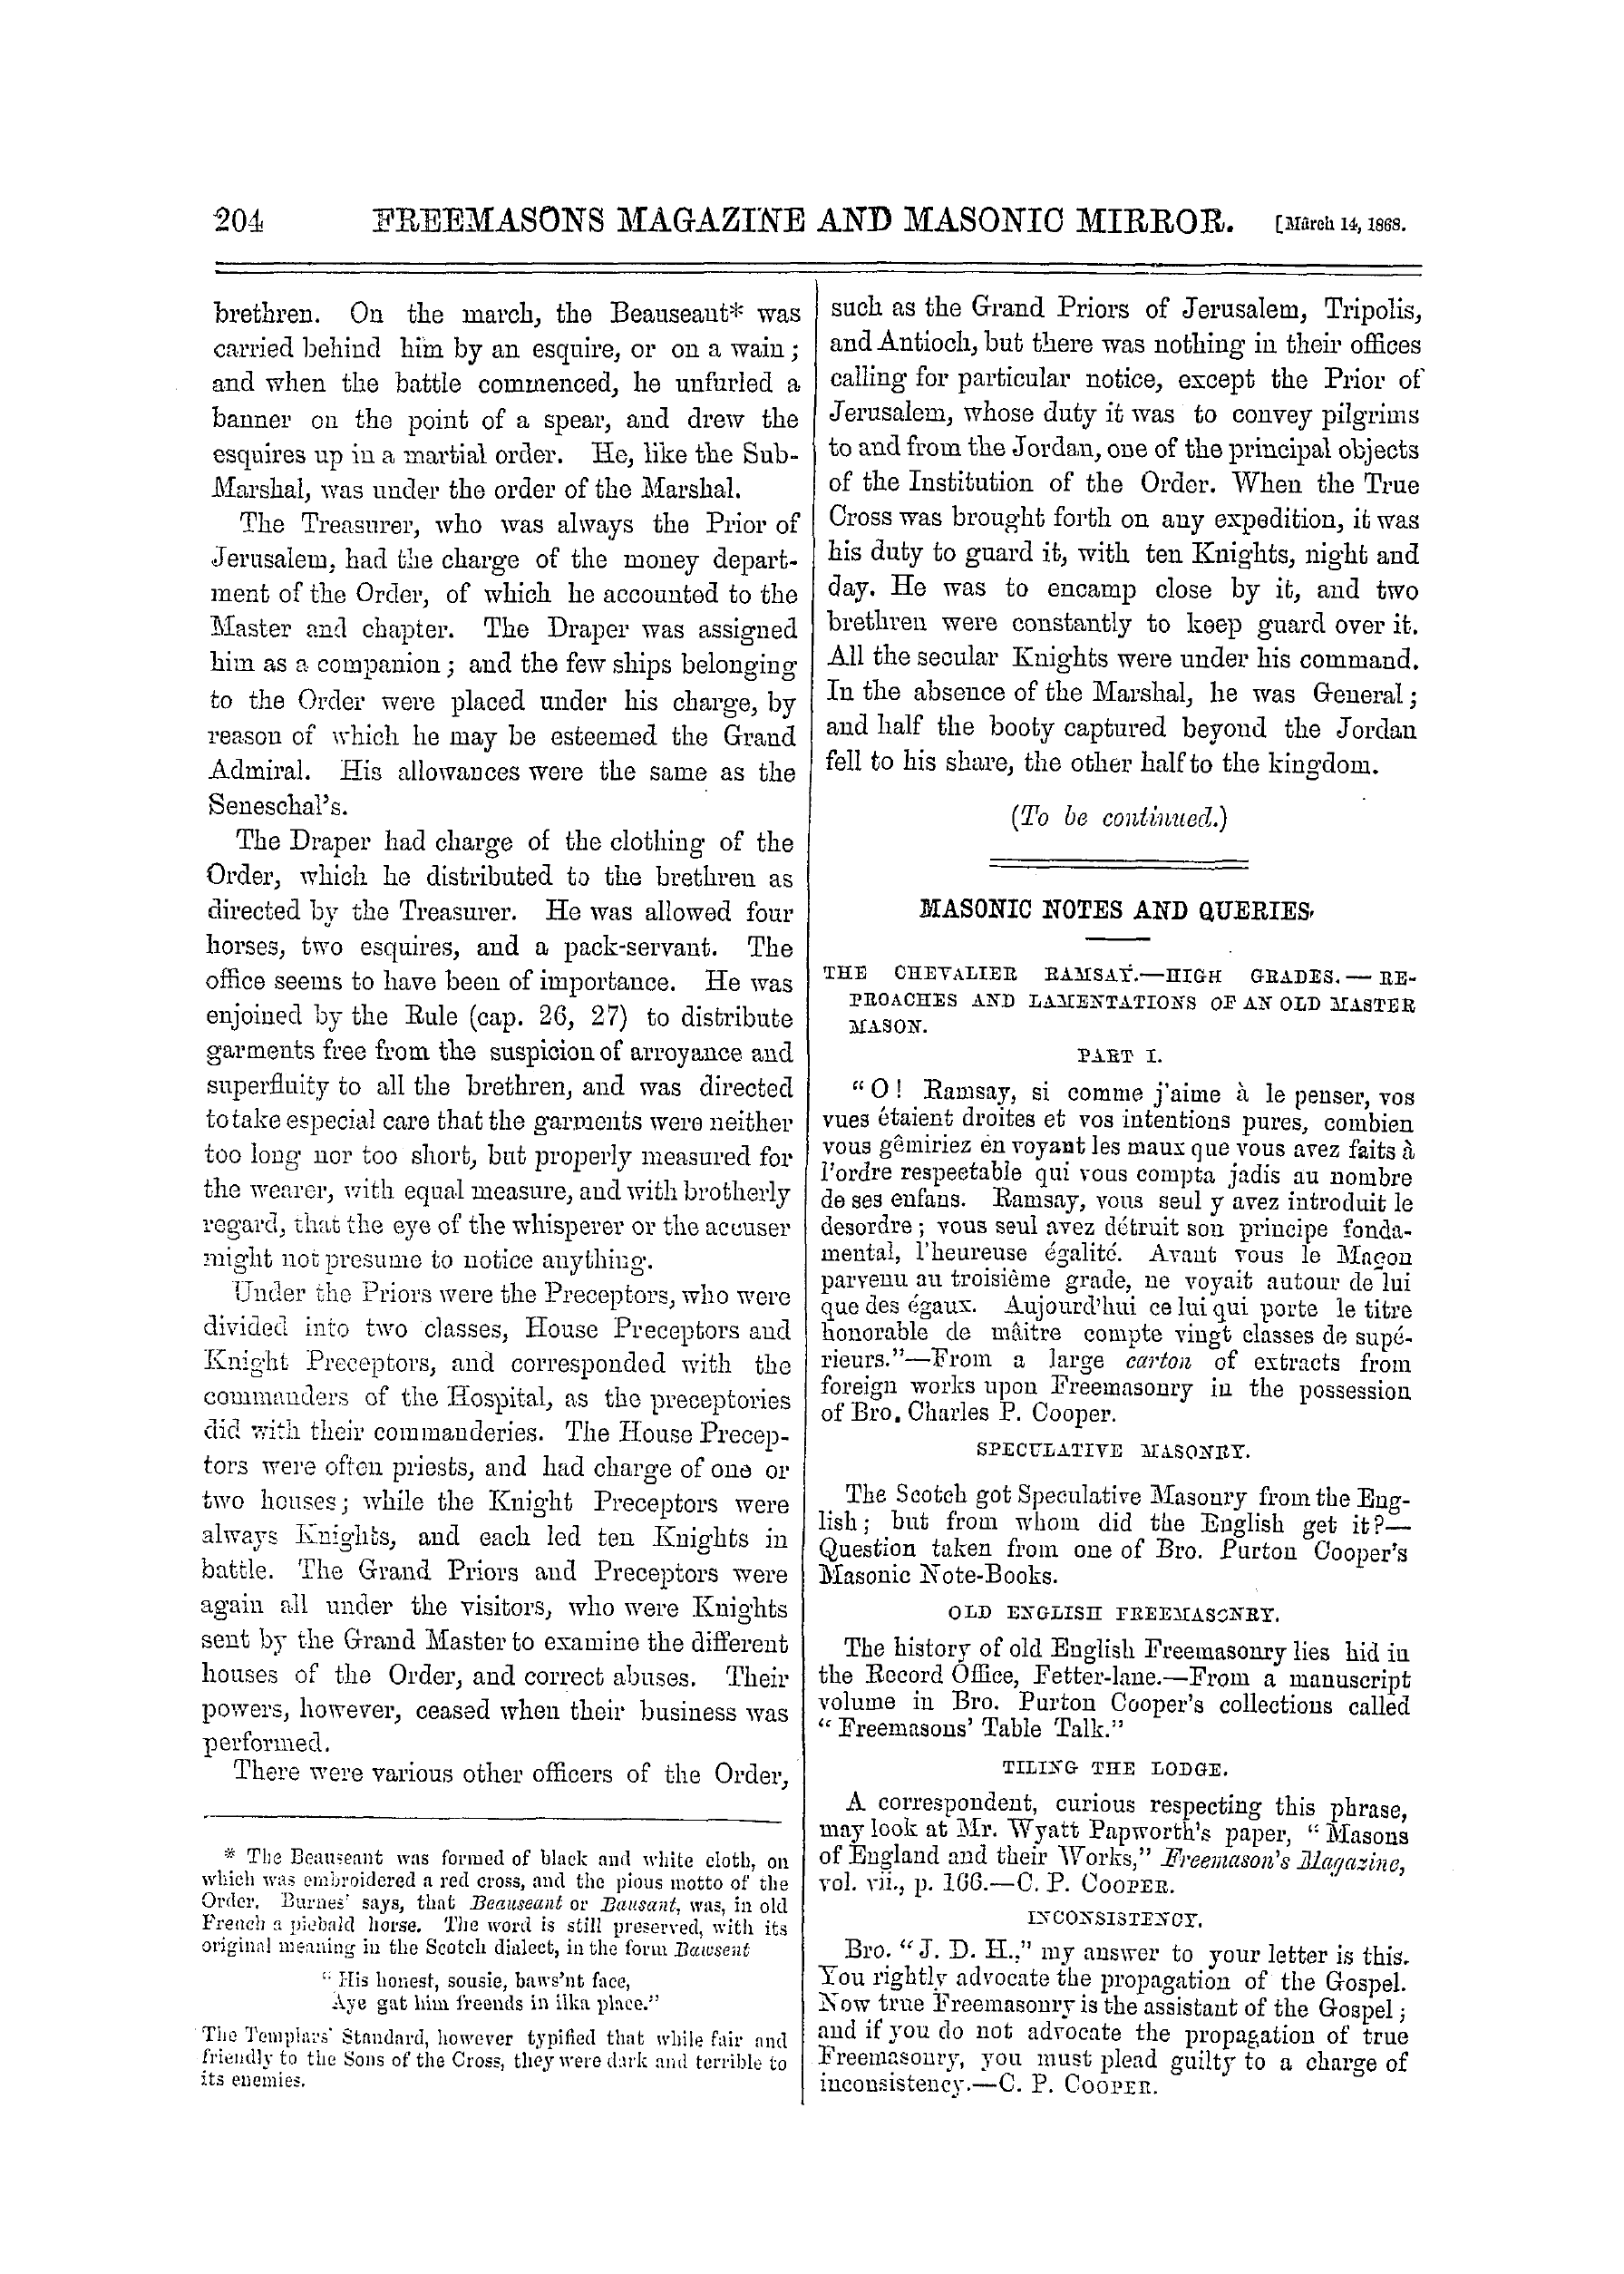 The Freemasons' Monthly Magazine: 1868-03-14 - Chapter Vi.